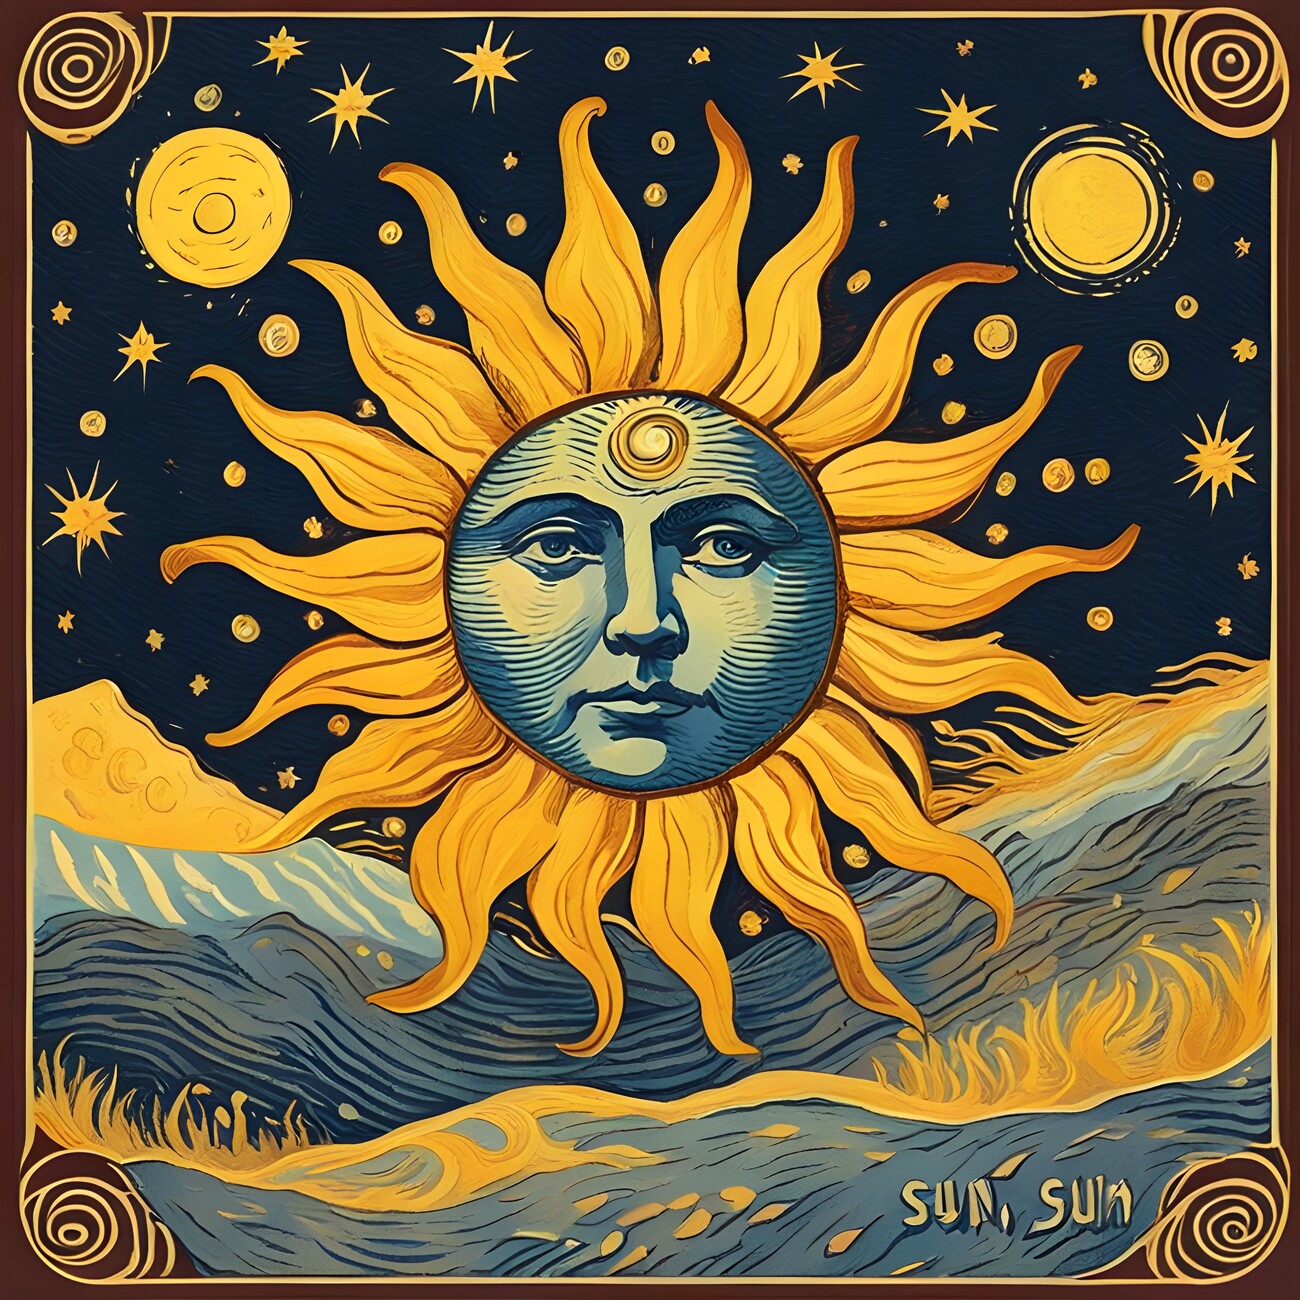 Illustration The Sun-a Van Gogh Style interpretation of the tarot card